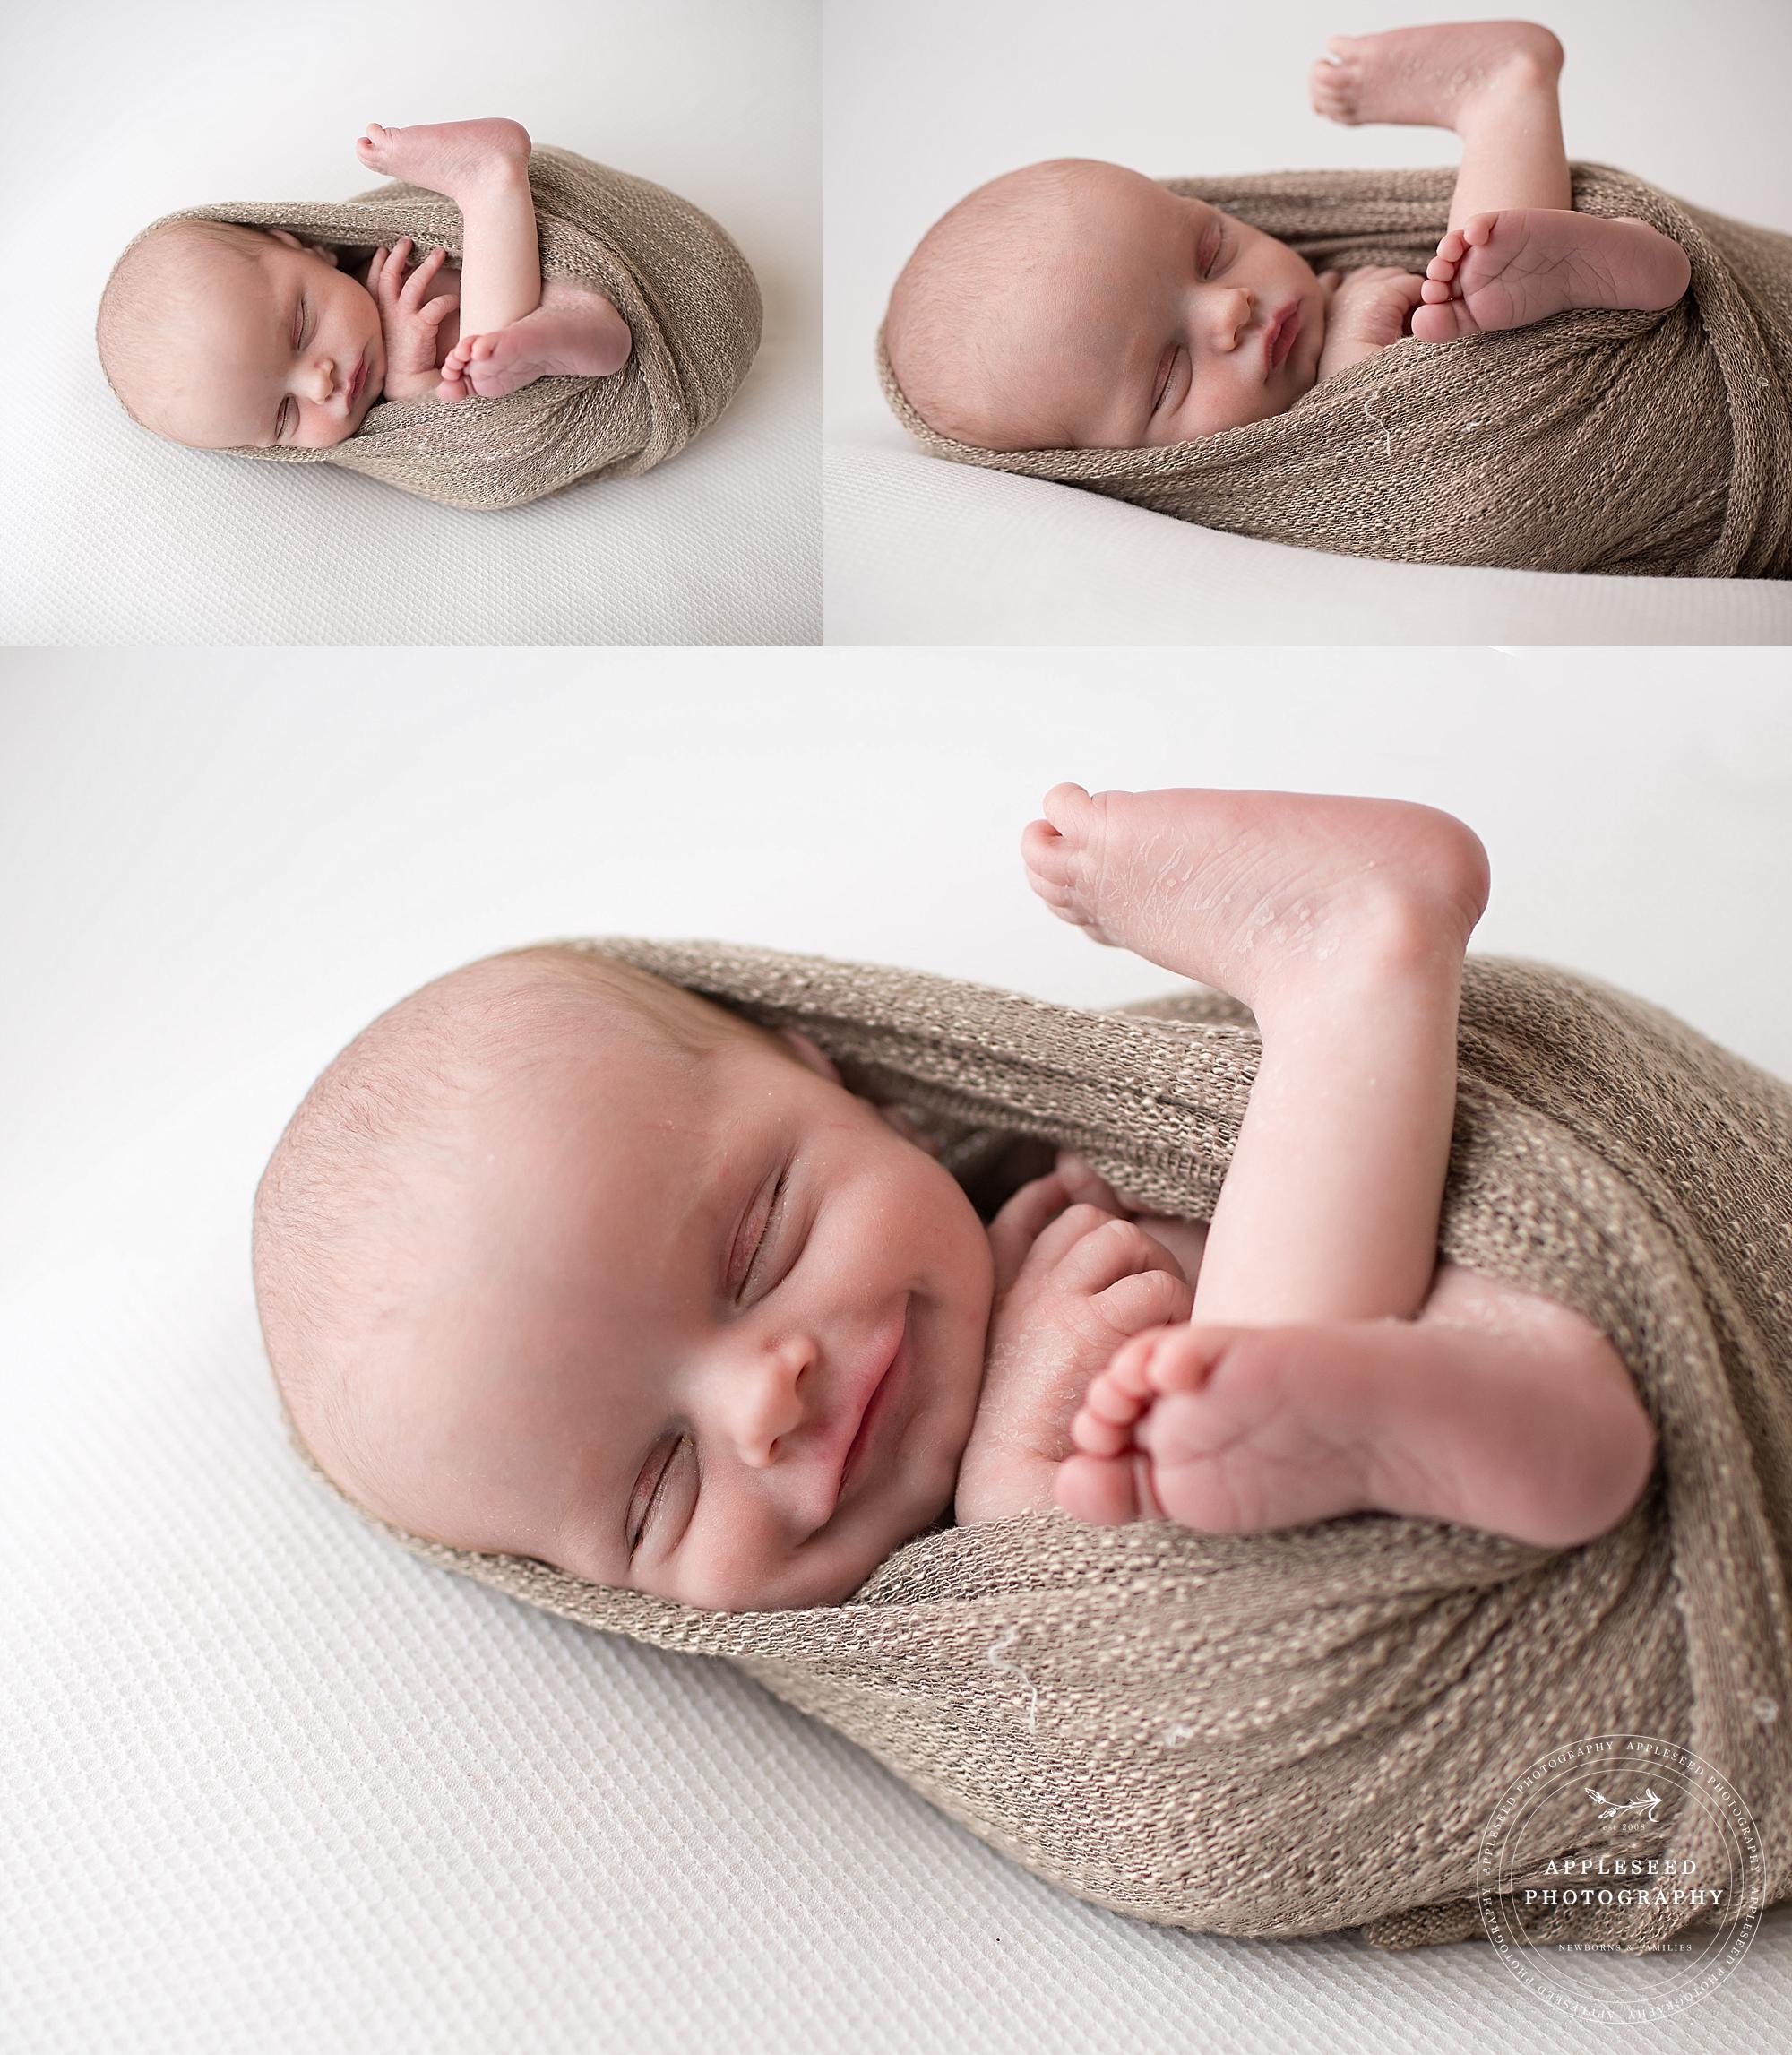 Newborn Photographer Atlanta | William | Appleseed Photography